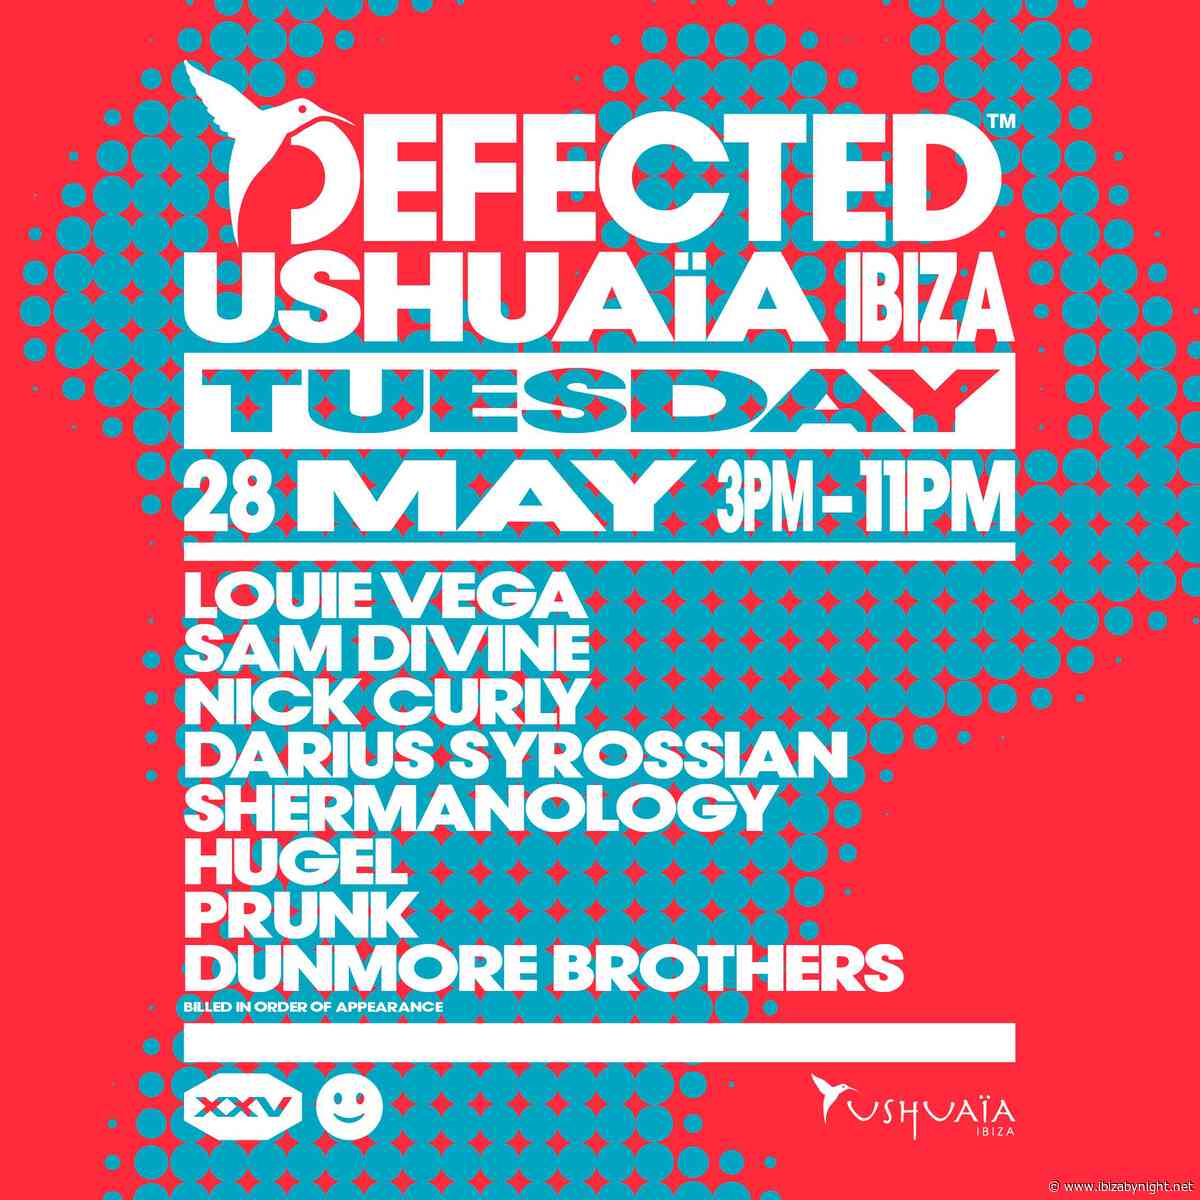 DEFECTED at Ushuaïa Ibiza presents  Louie Vega, Sam Divine, Darius Syrossian, Nick Curly & many more!